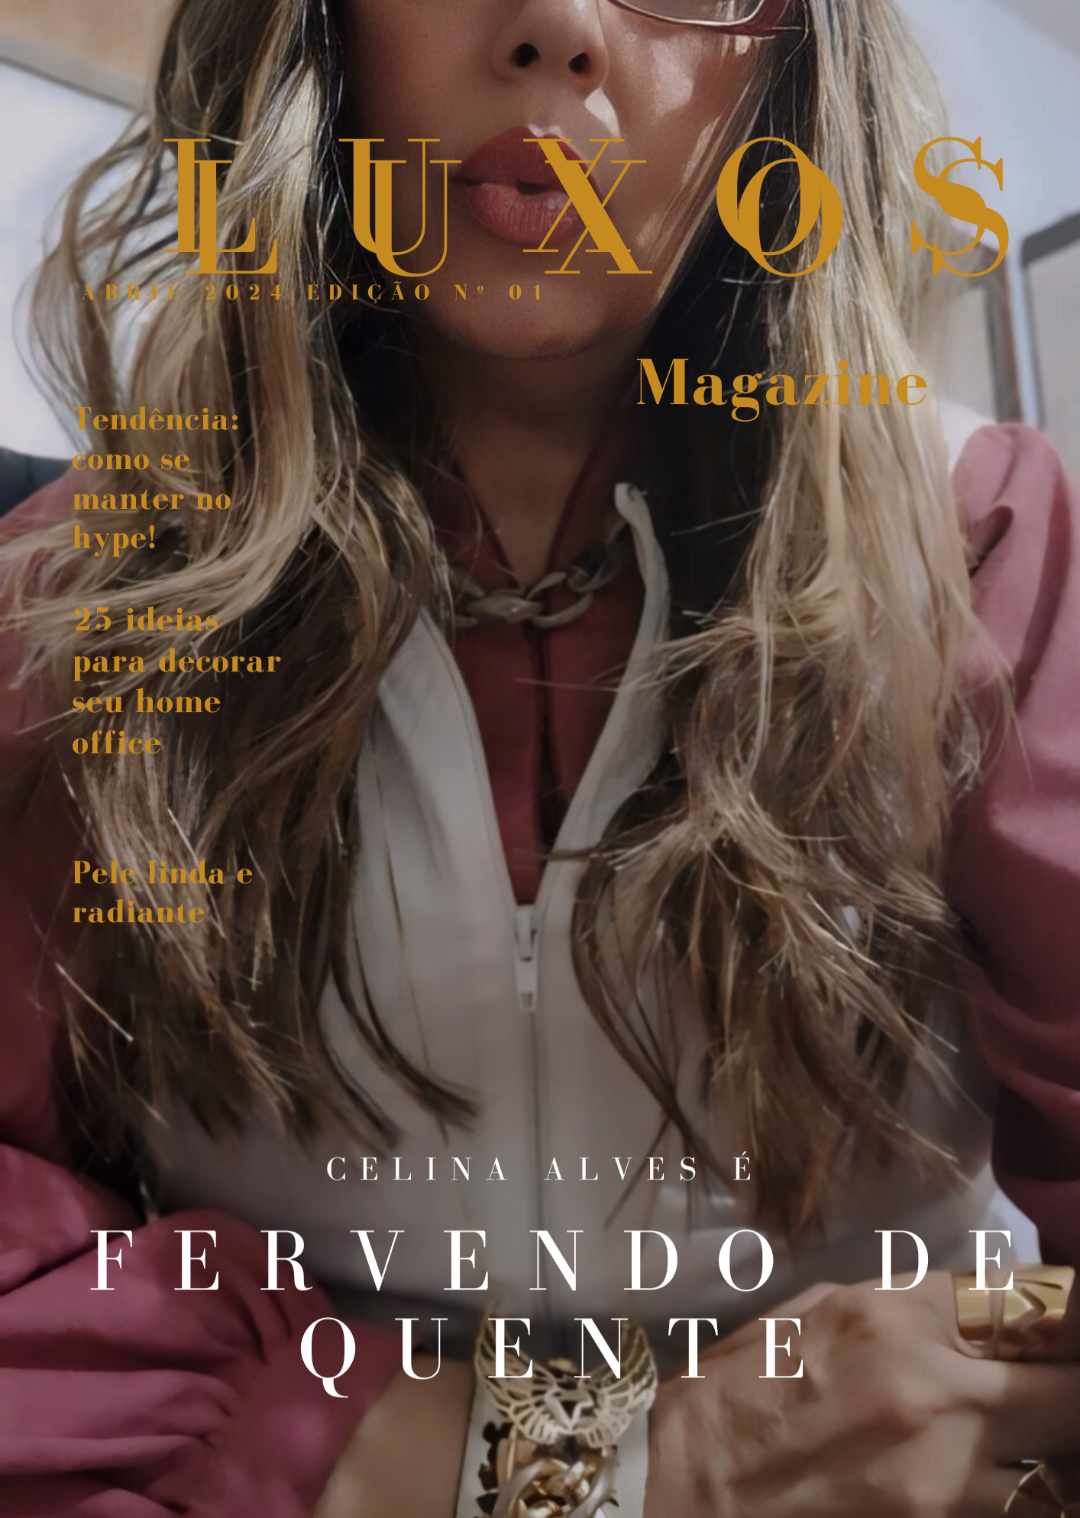 luxos e luxos magazine